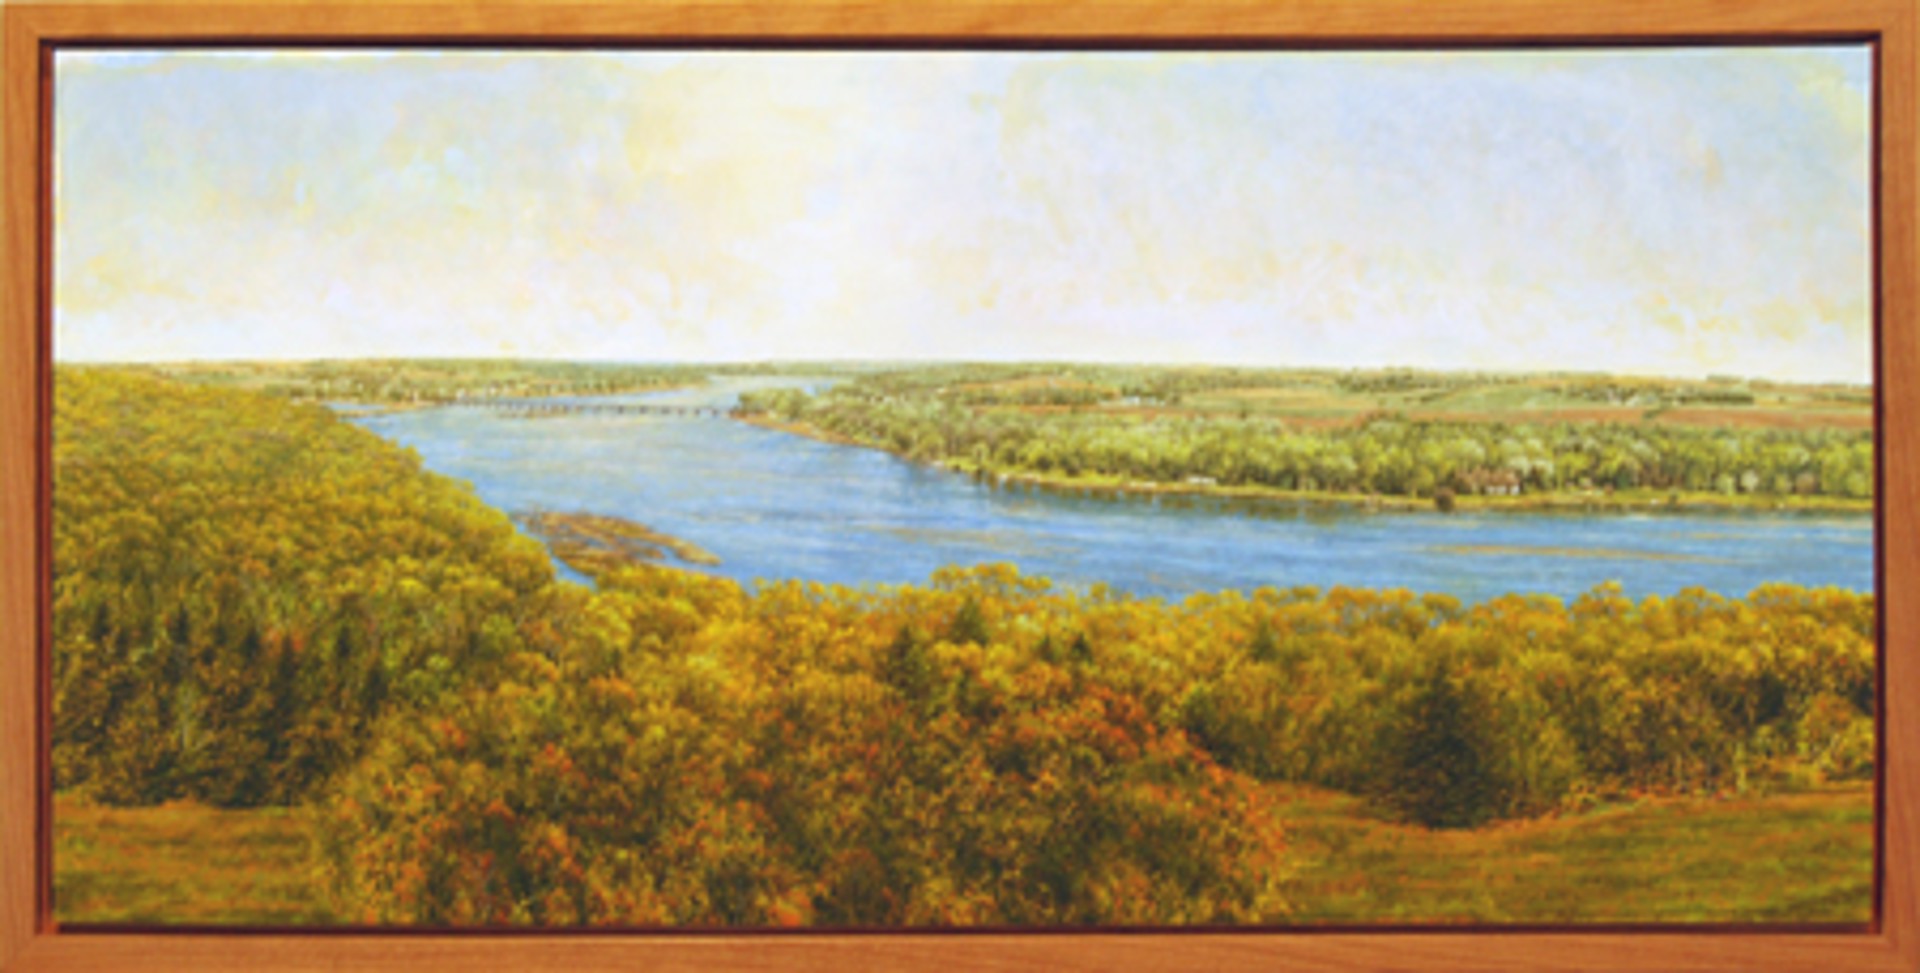 The Platte River by James D. Butler